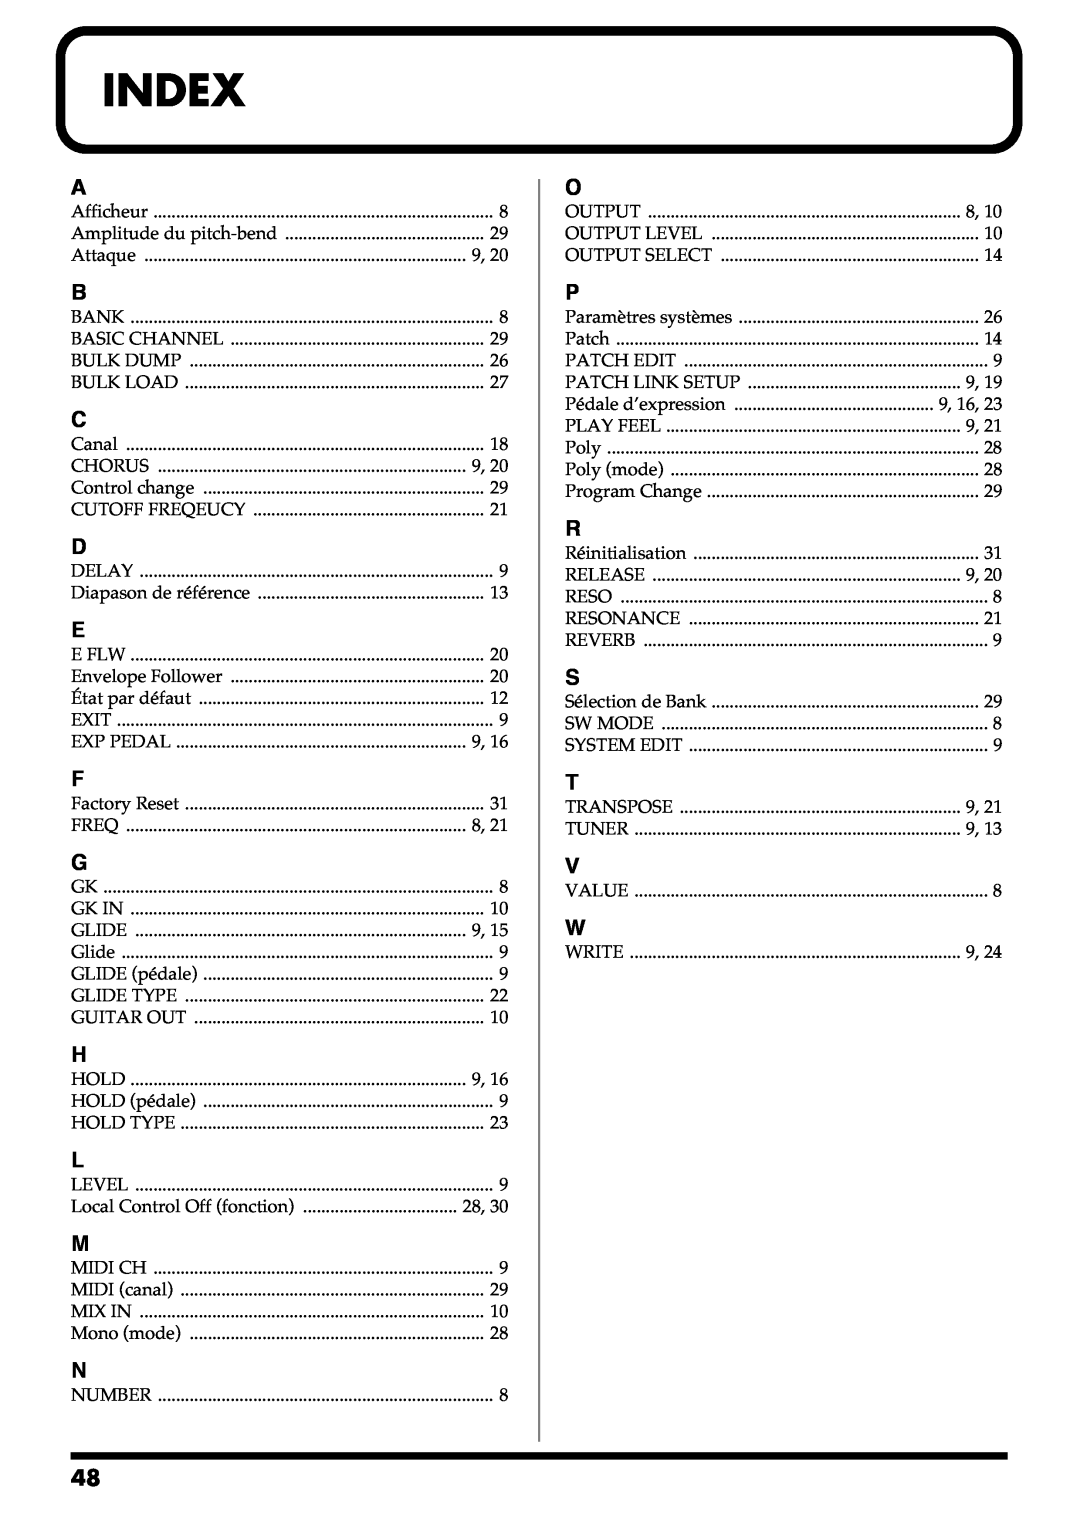 Roland GR-20 manual Index 